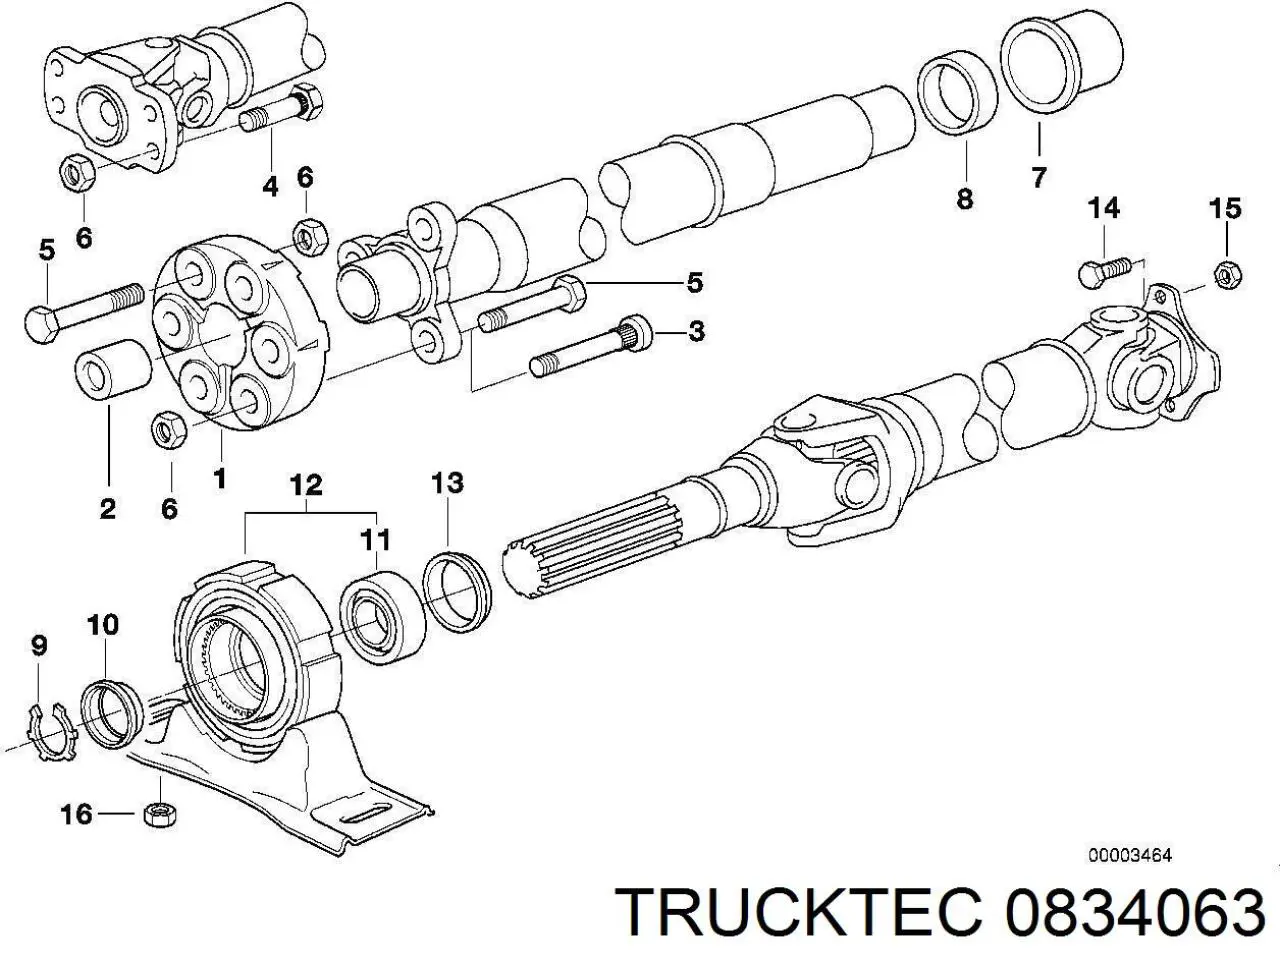 08.34.063 Trucktec articulación, árbol longitudinal, delantera